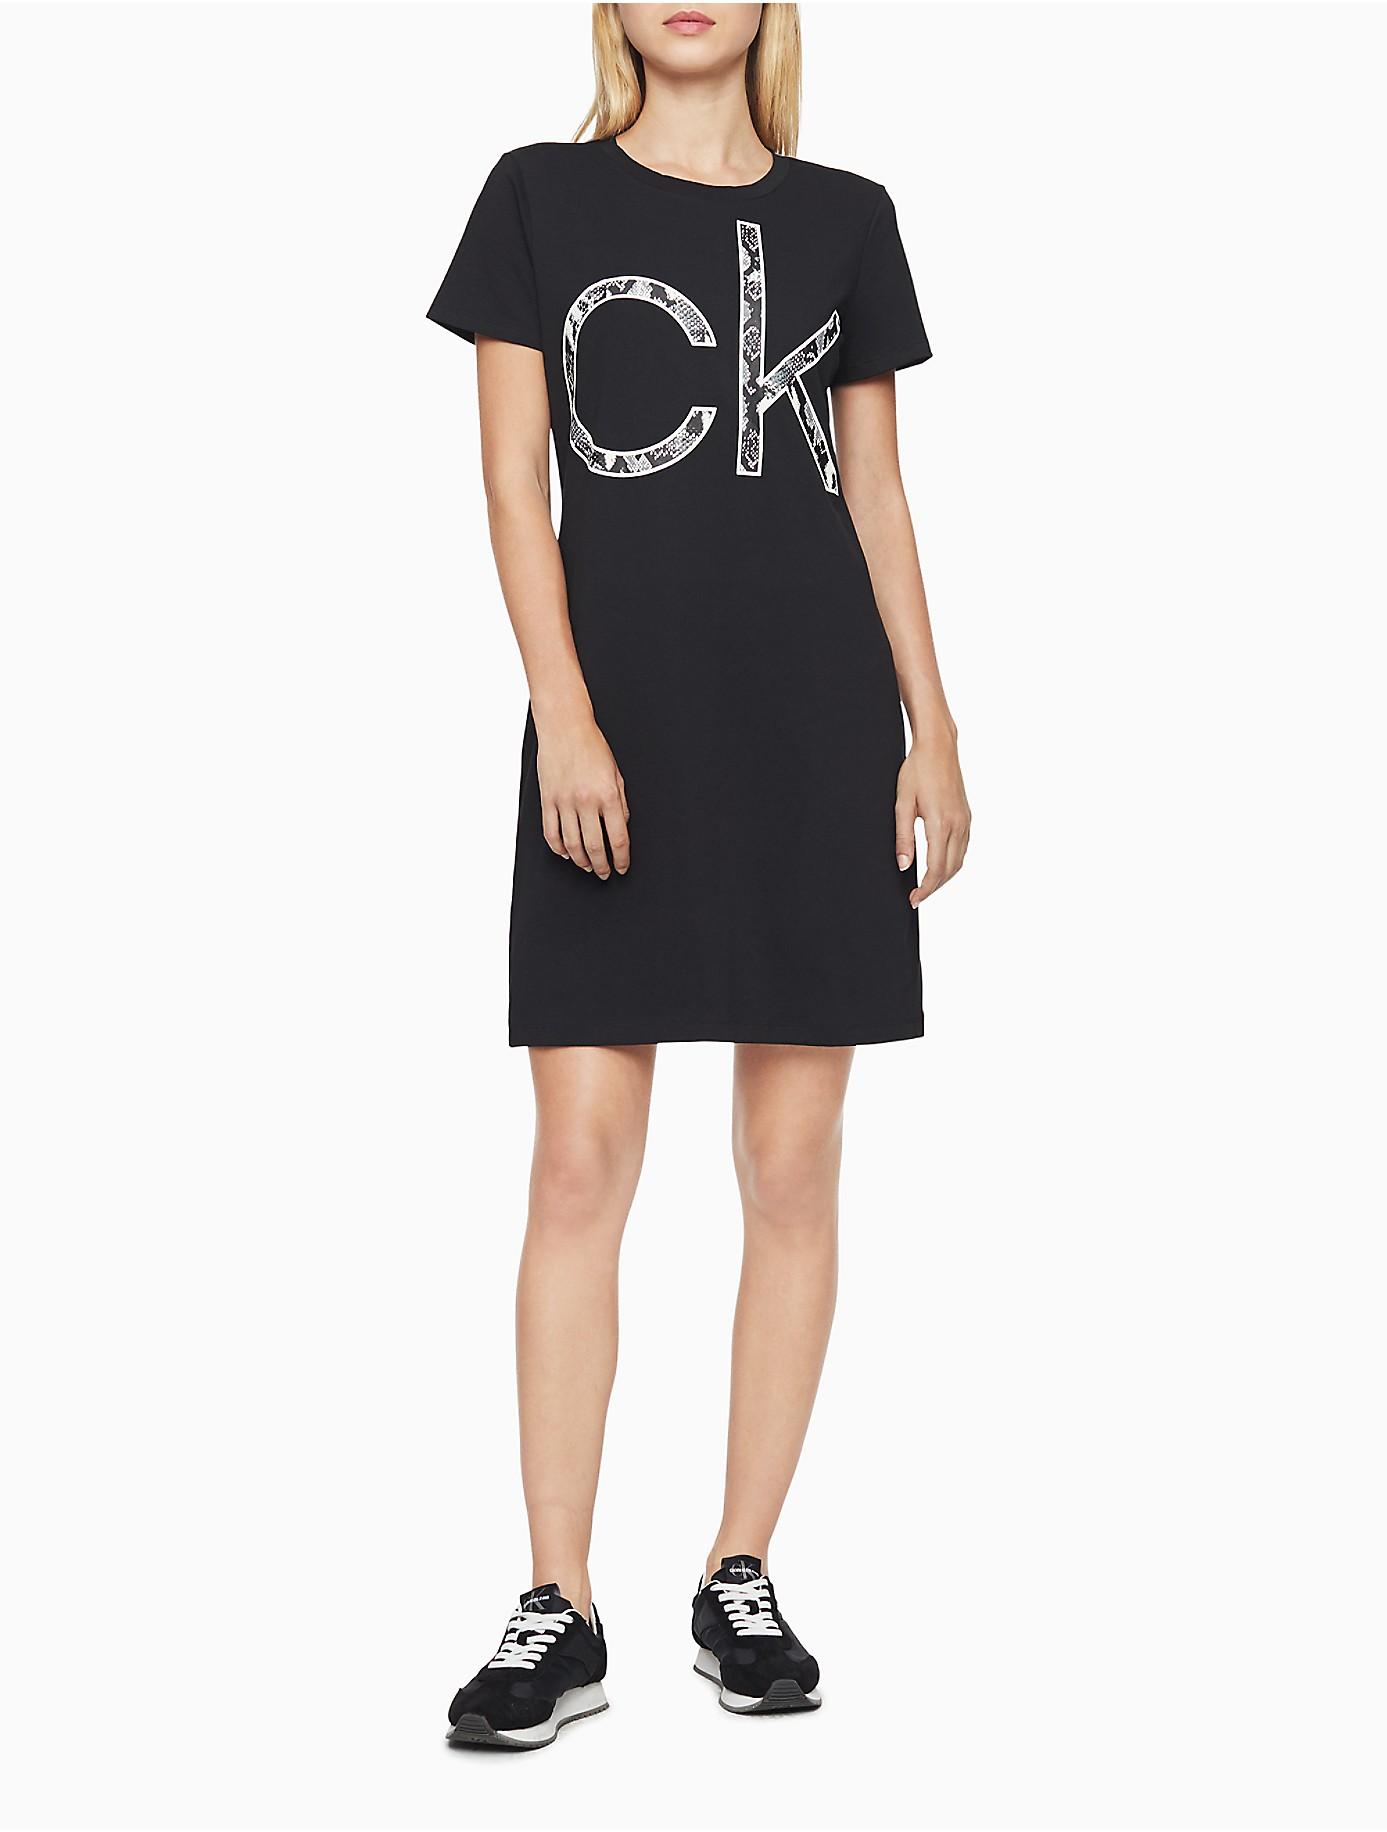 Calvin Klein Cotton Snake Print Logo Crewneck T-shirt Dress in Black - Lyst